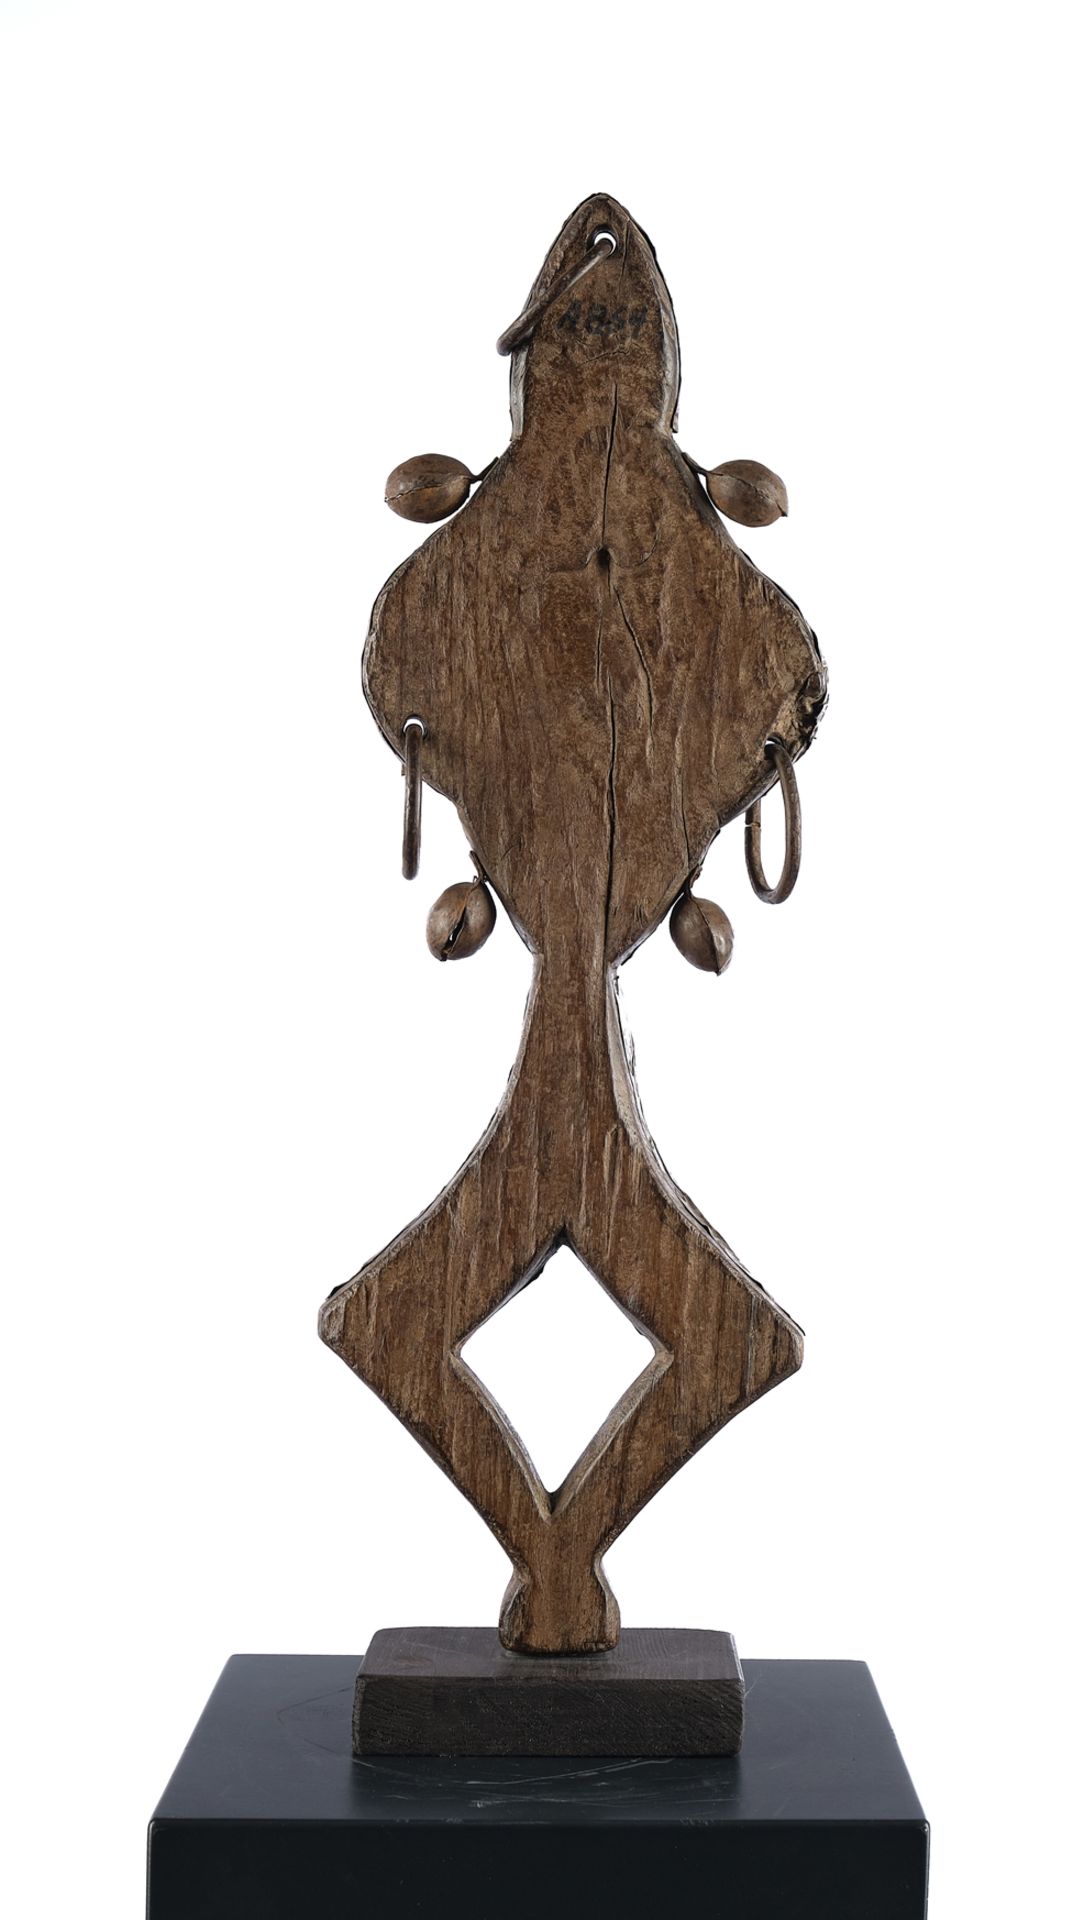 Reliquienfigur, Bakota, Gabun, Afrika, Grabwächter aus Holz, mit Kupfer- und Messingblech verziert, - Bild 2 aus 2